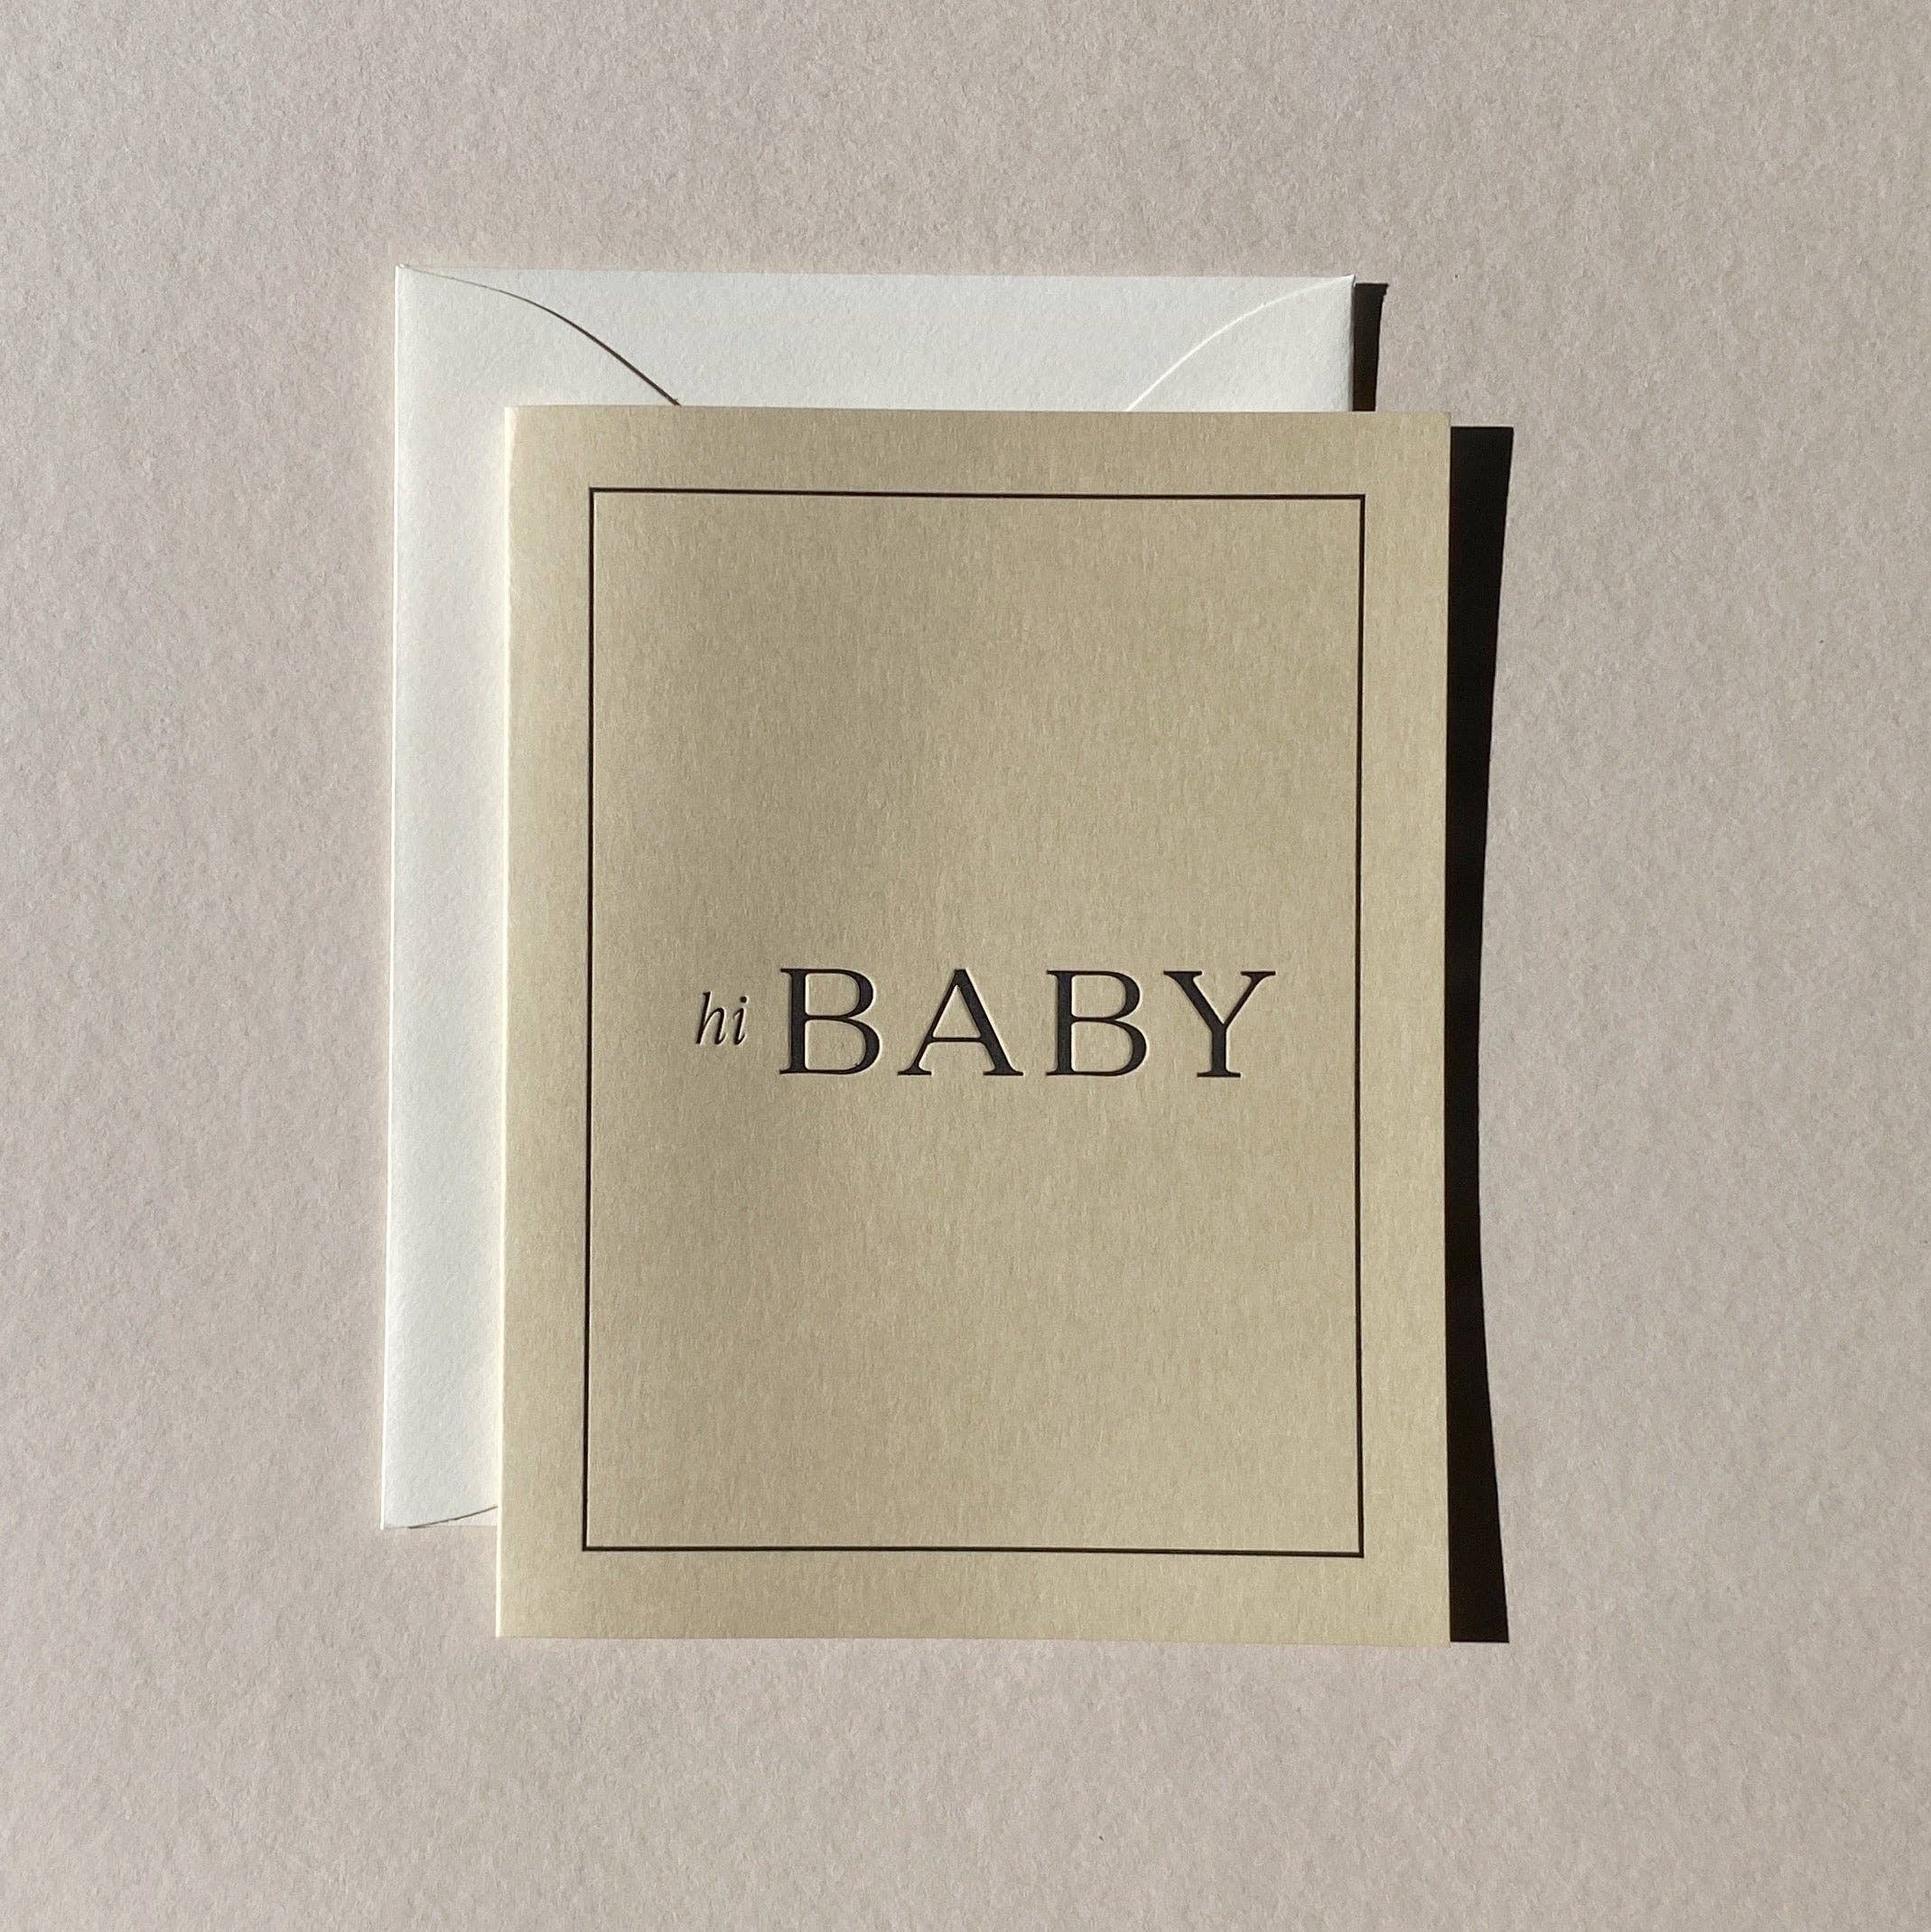 Card - "Hi Baby"